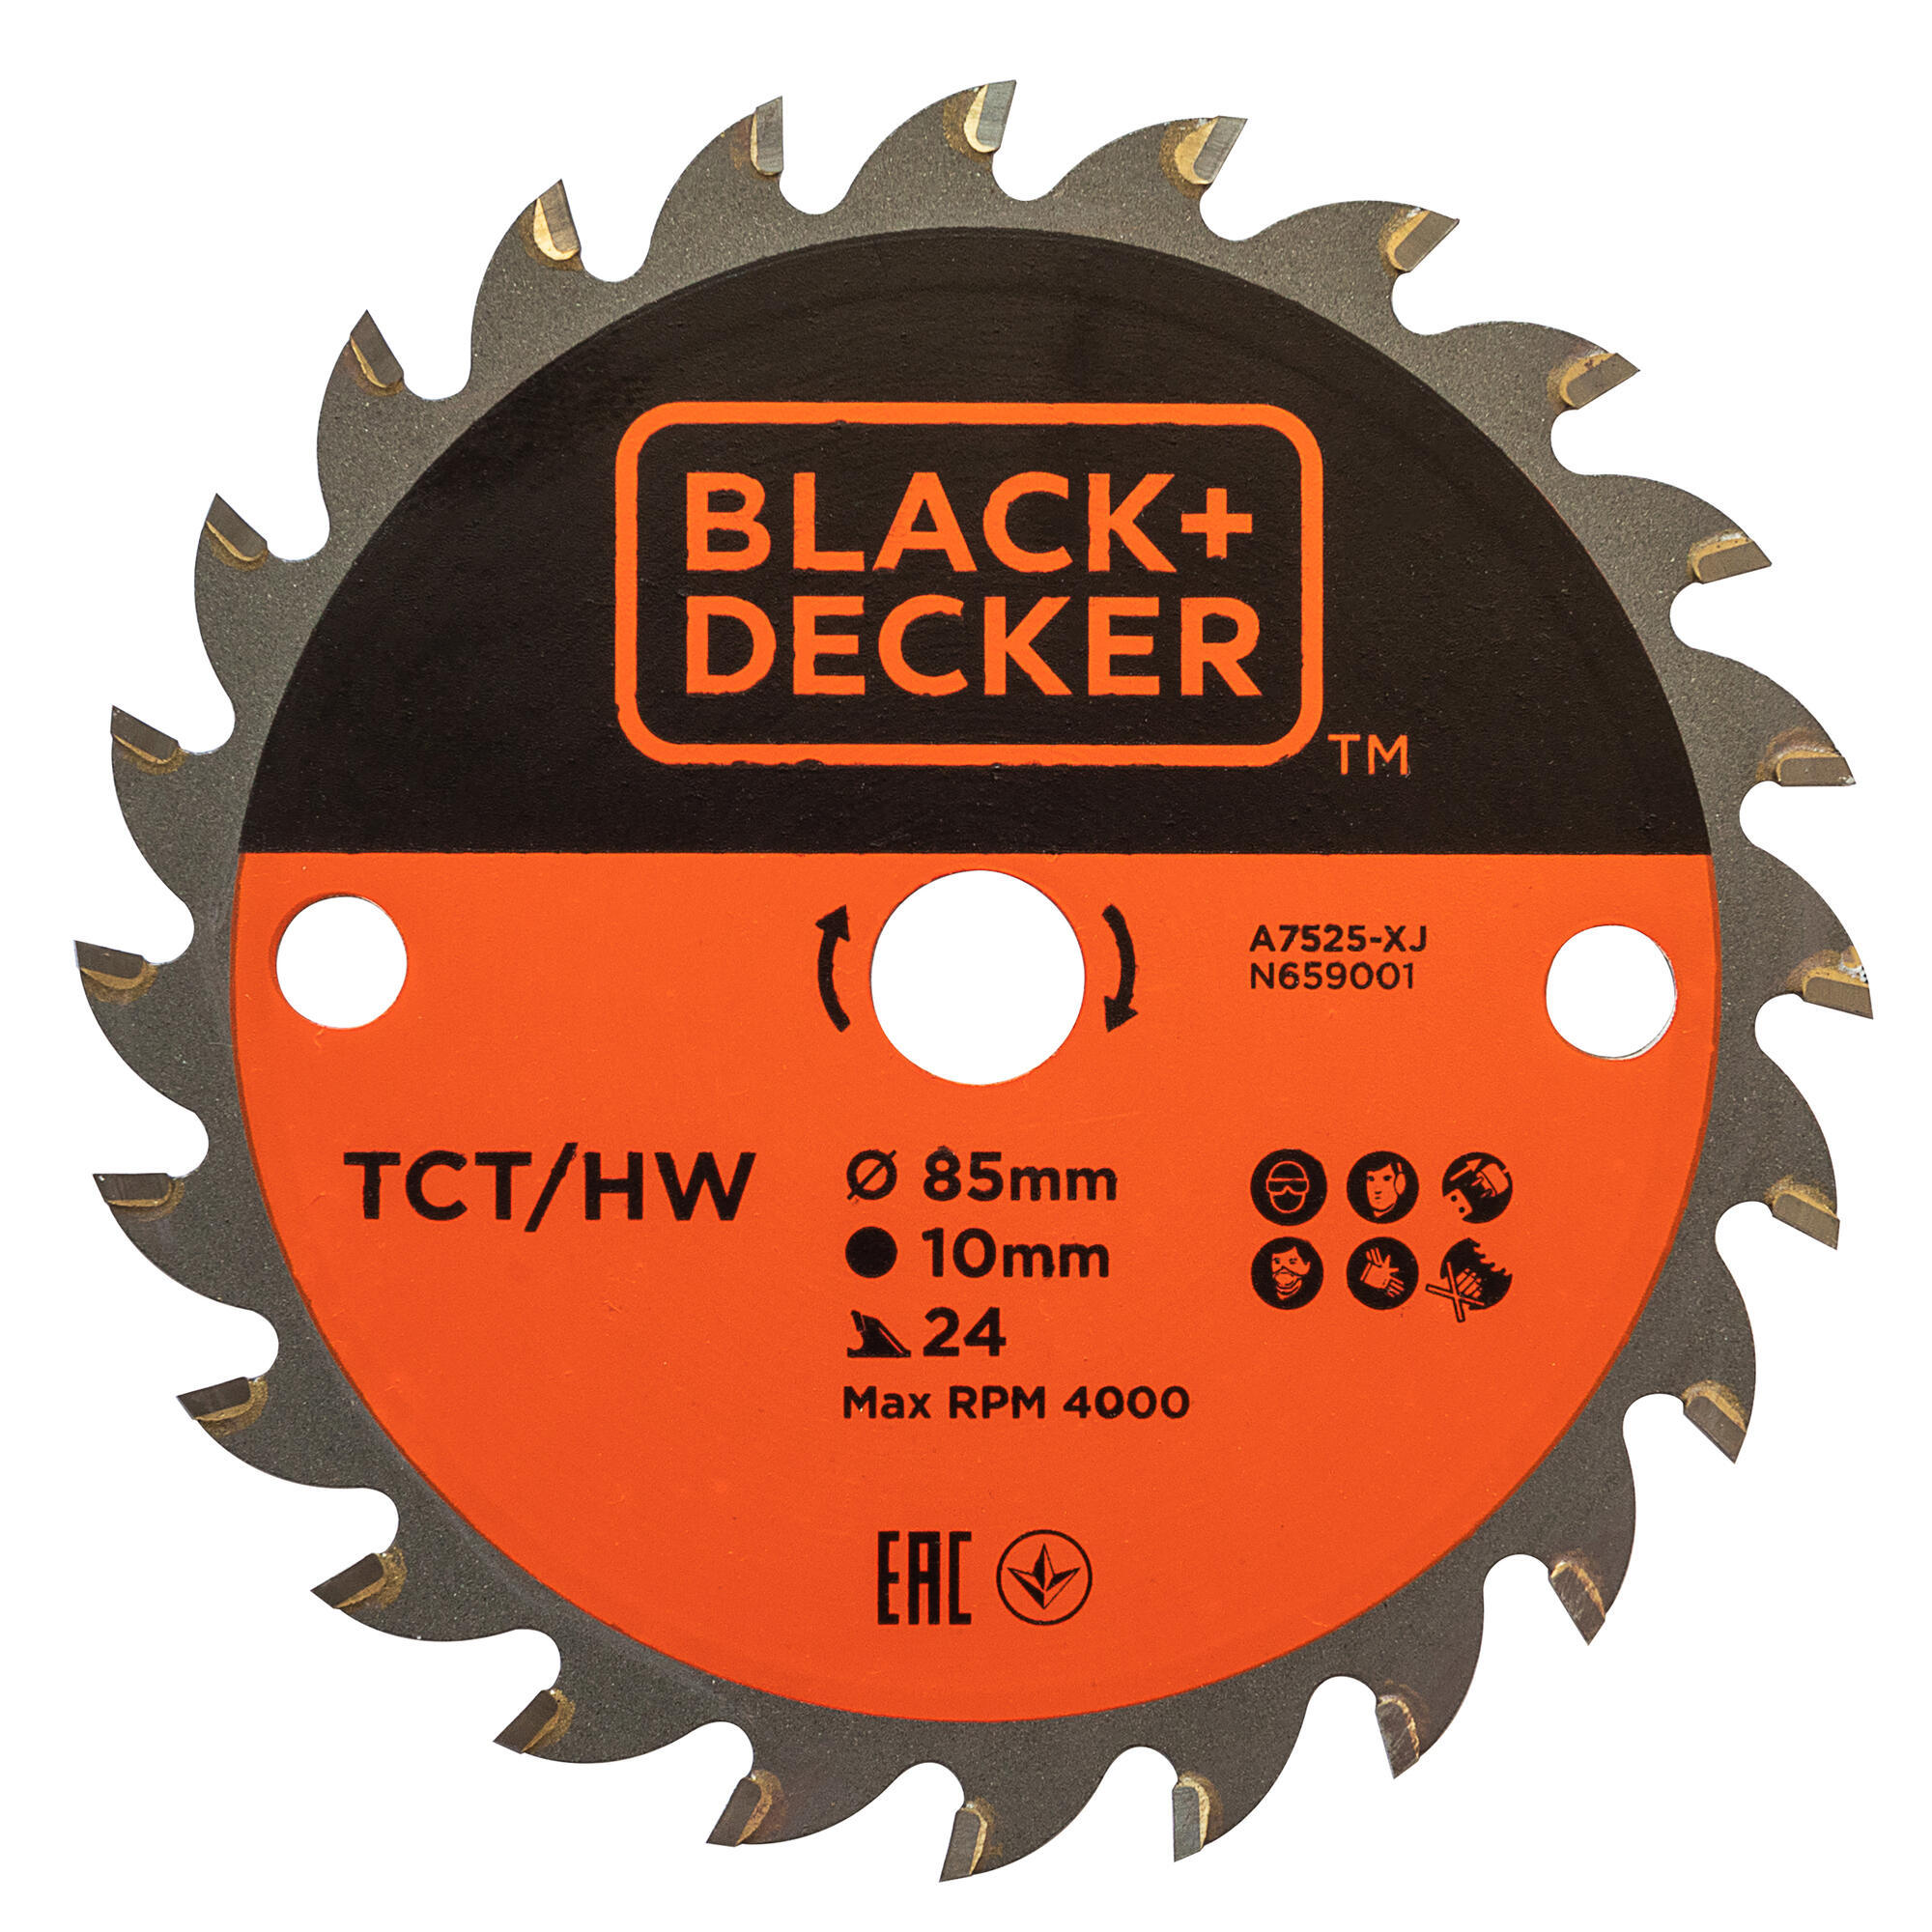 Black+ decker a7525 hoja de sierra circular tct 85x10 24t